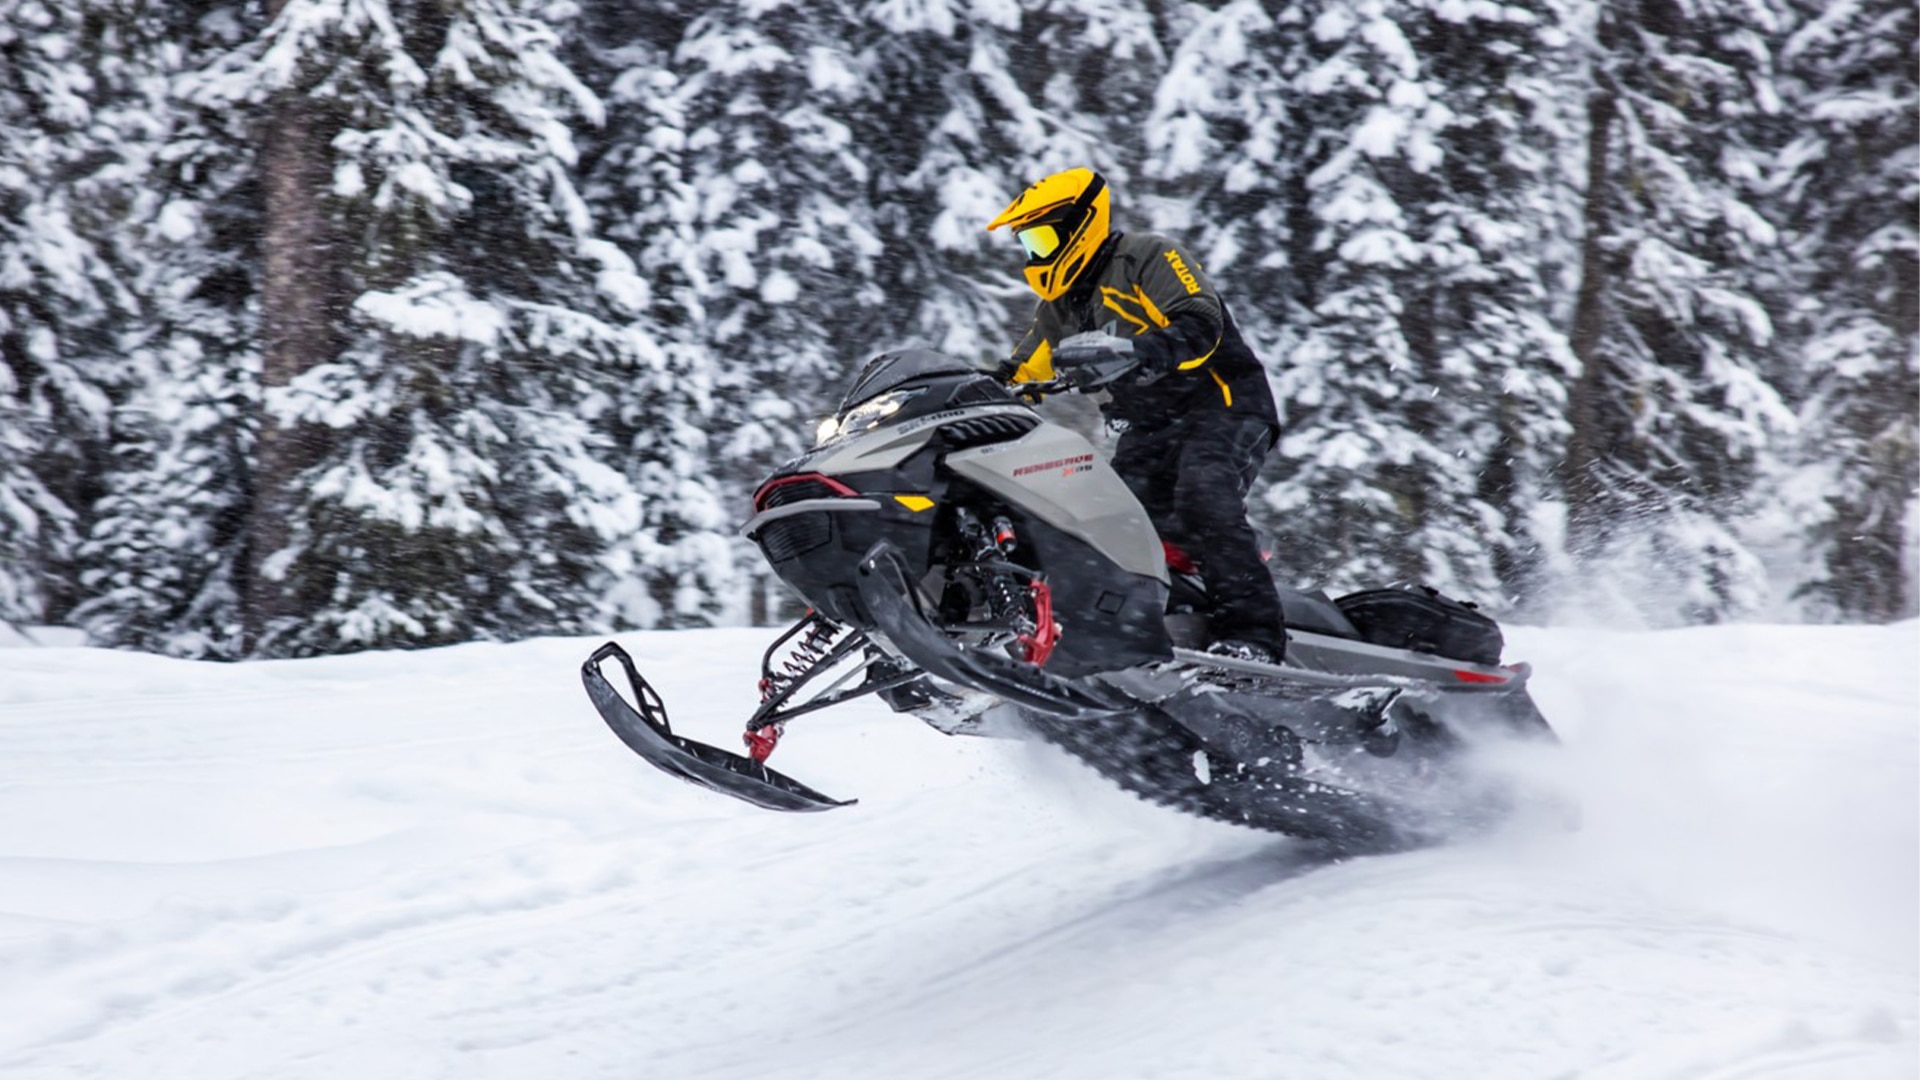 2023 Ski-Doo Renegade X-RS in action